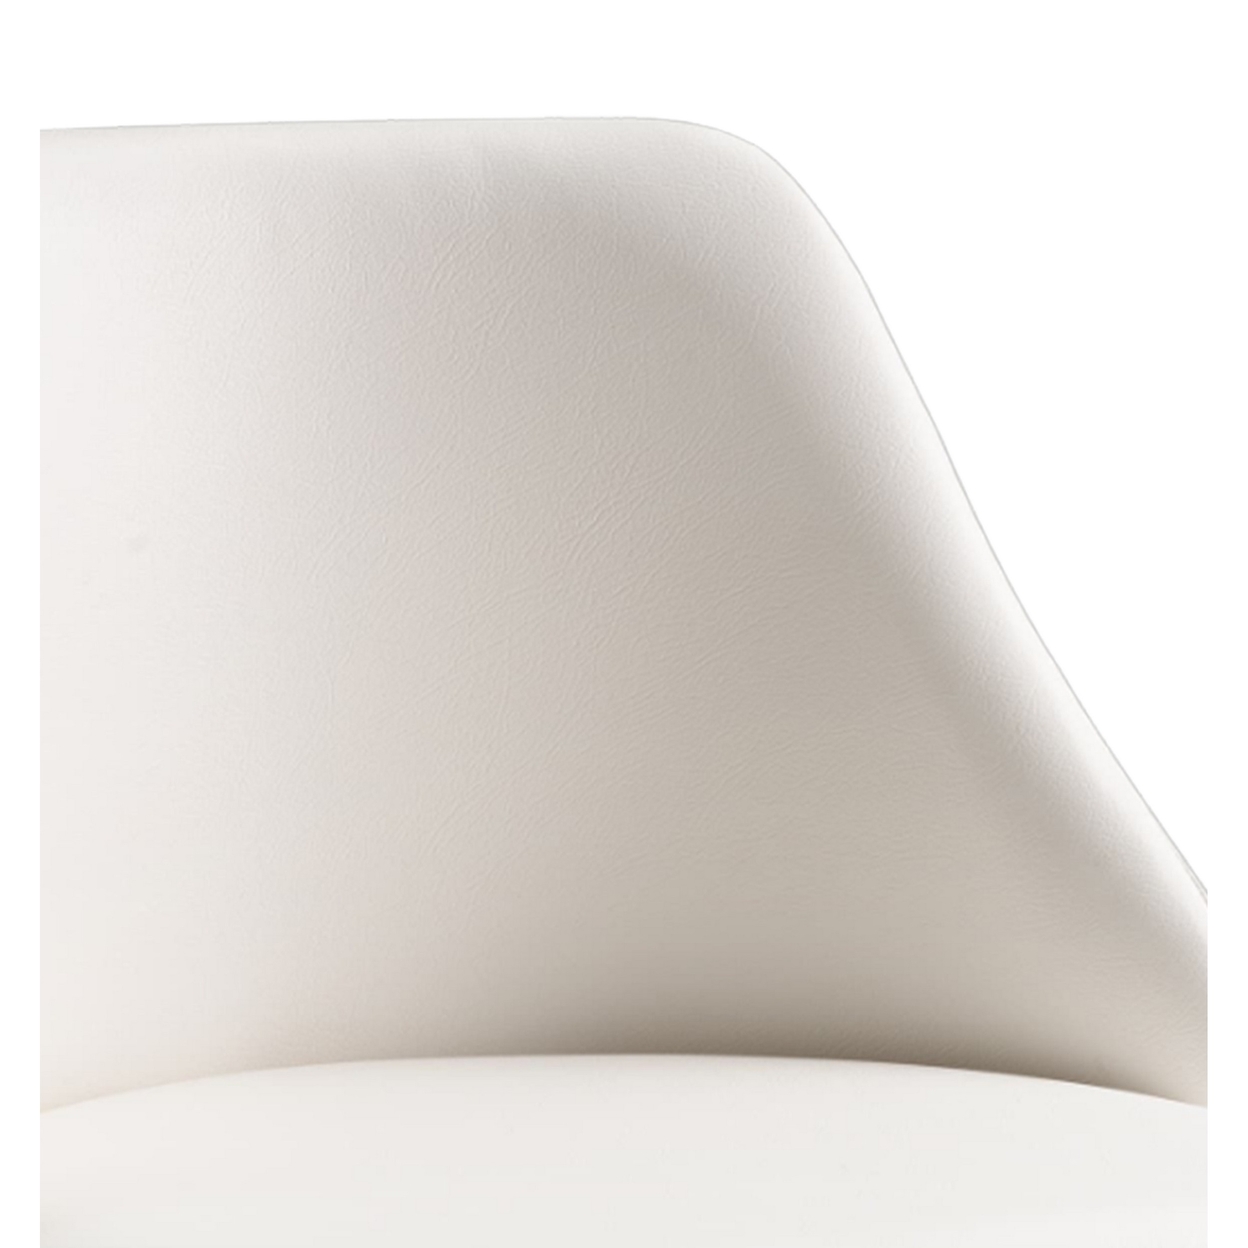 Yim 22 Inch Adjustable Swivel Office Chair, White Faux Leather, Chrome Base - Saltoro Sherpi